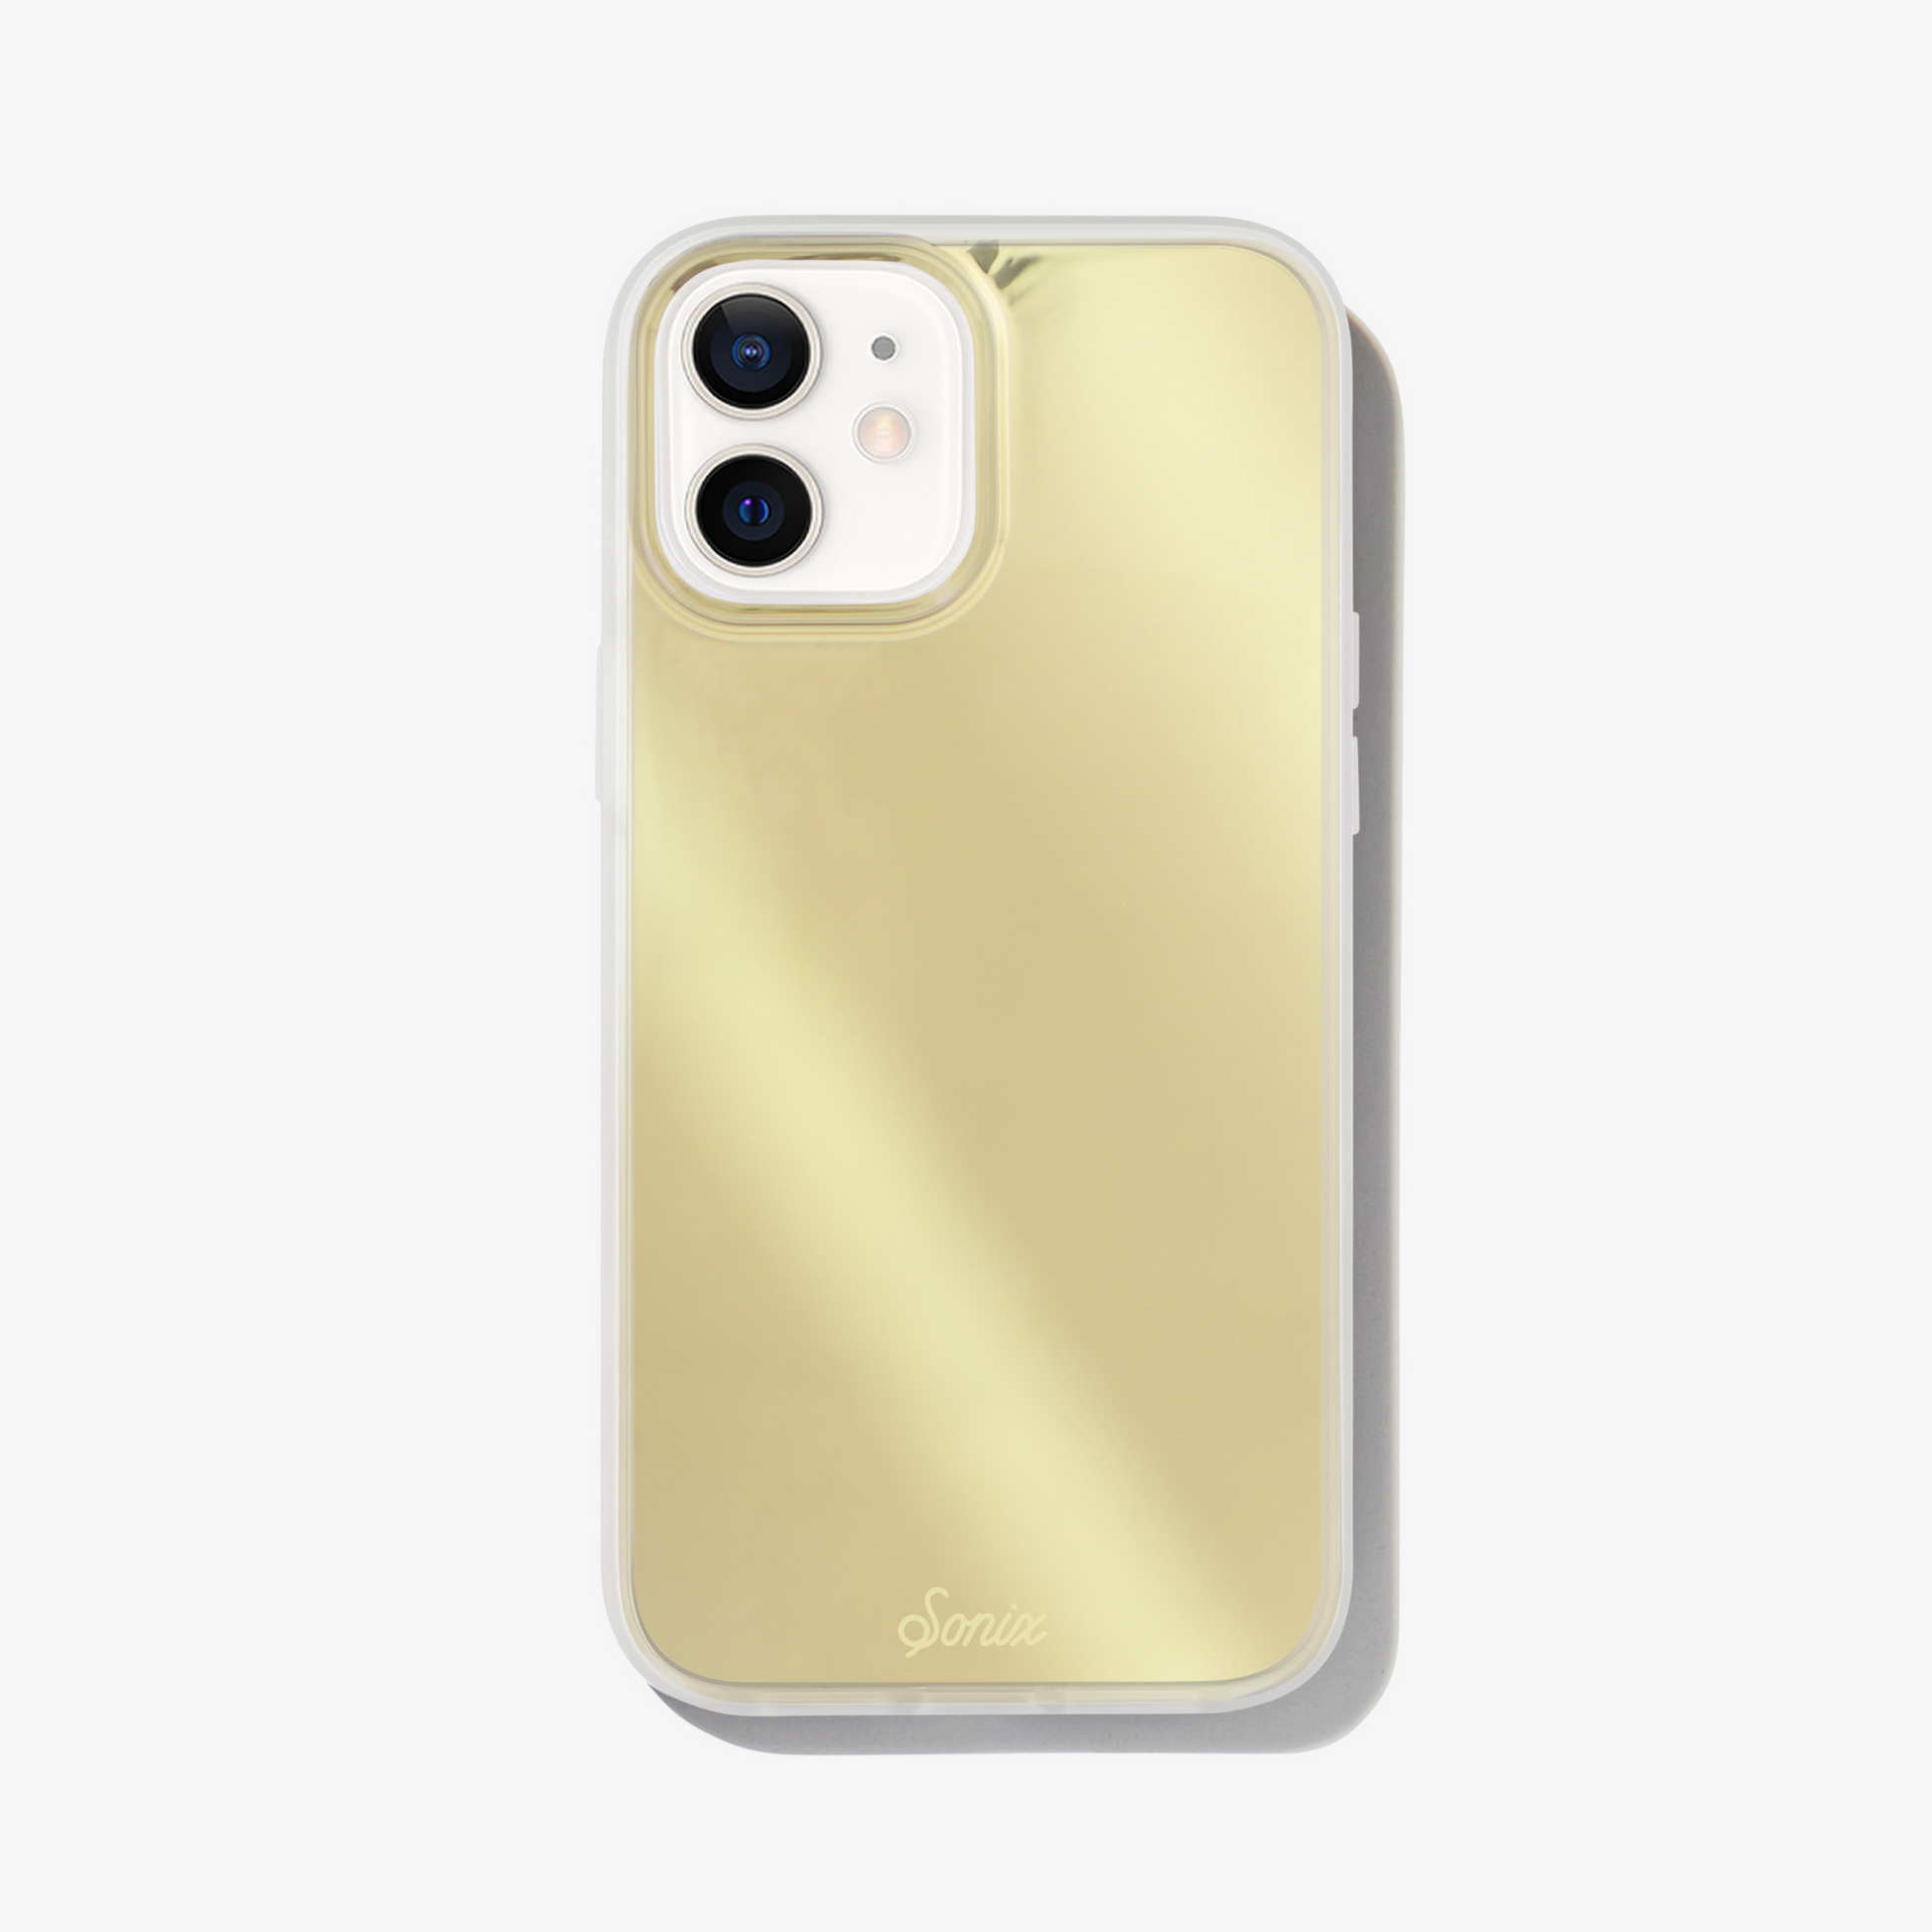 a metallic gold design shown on an iphone 12 mini